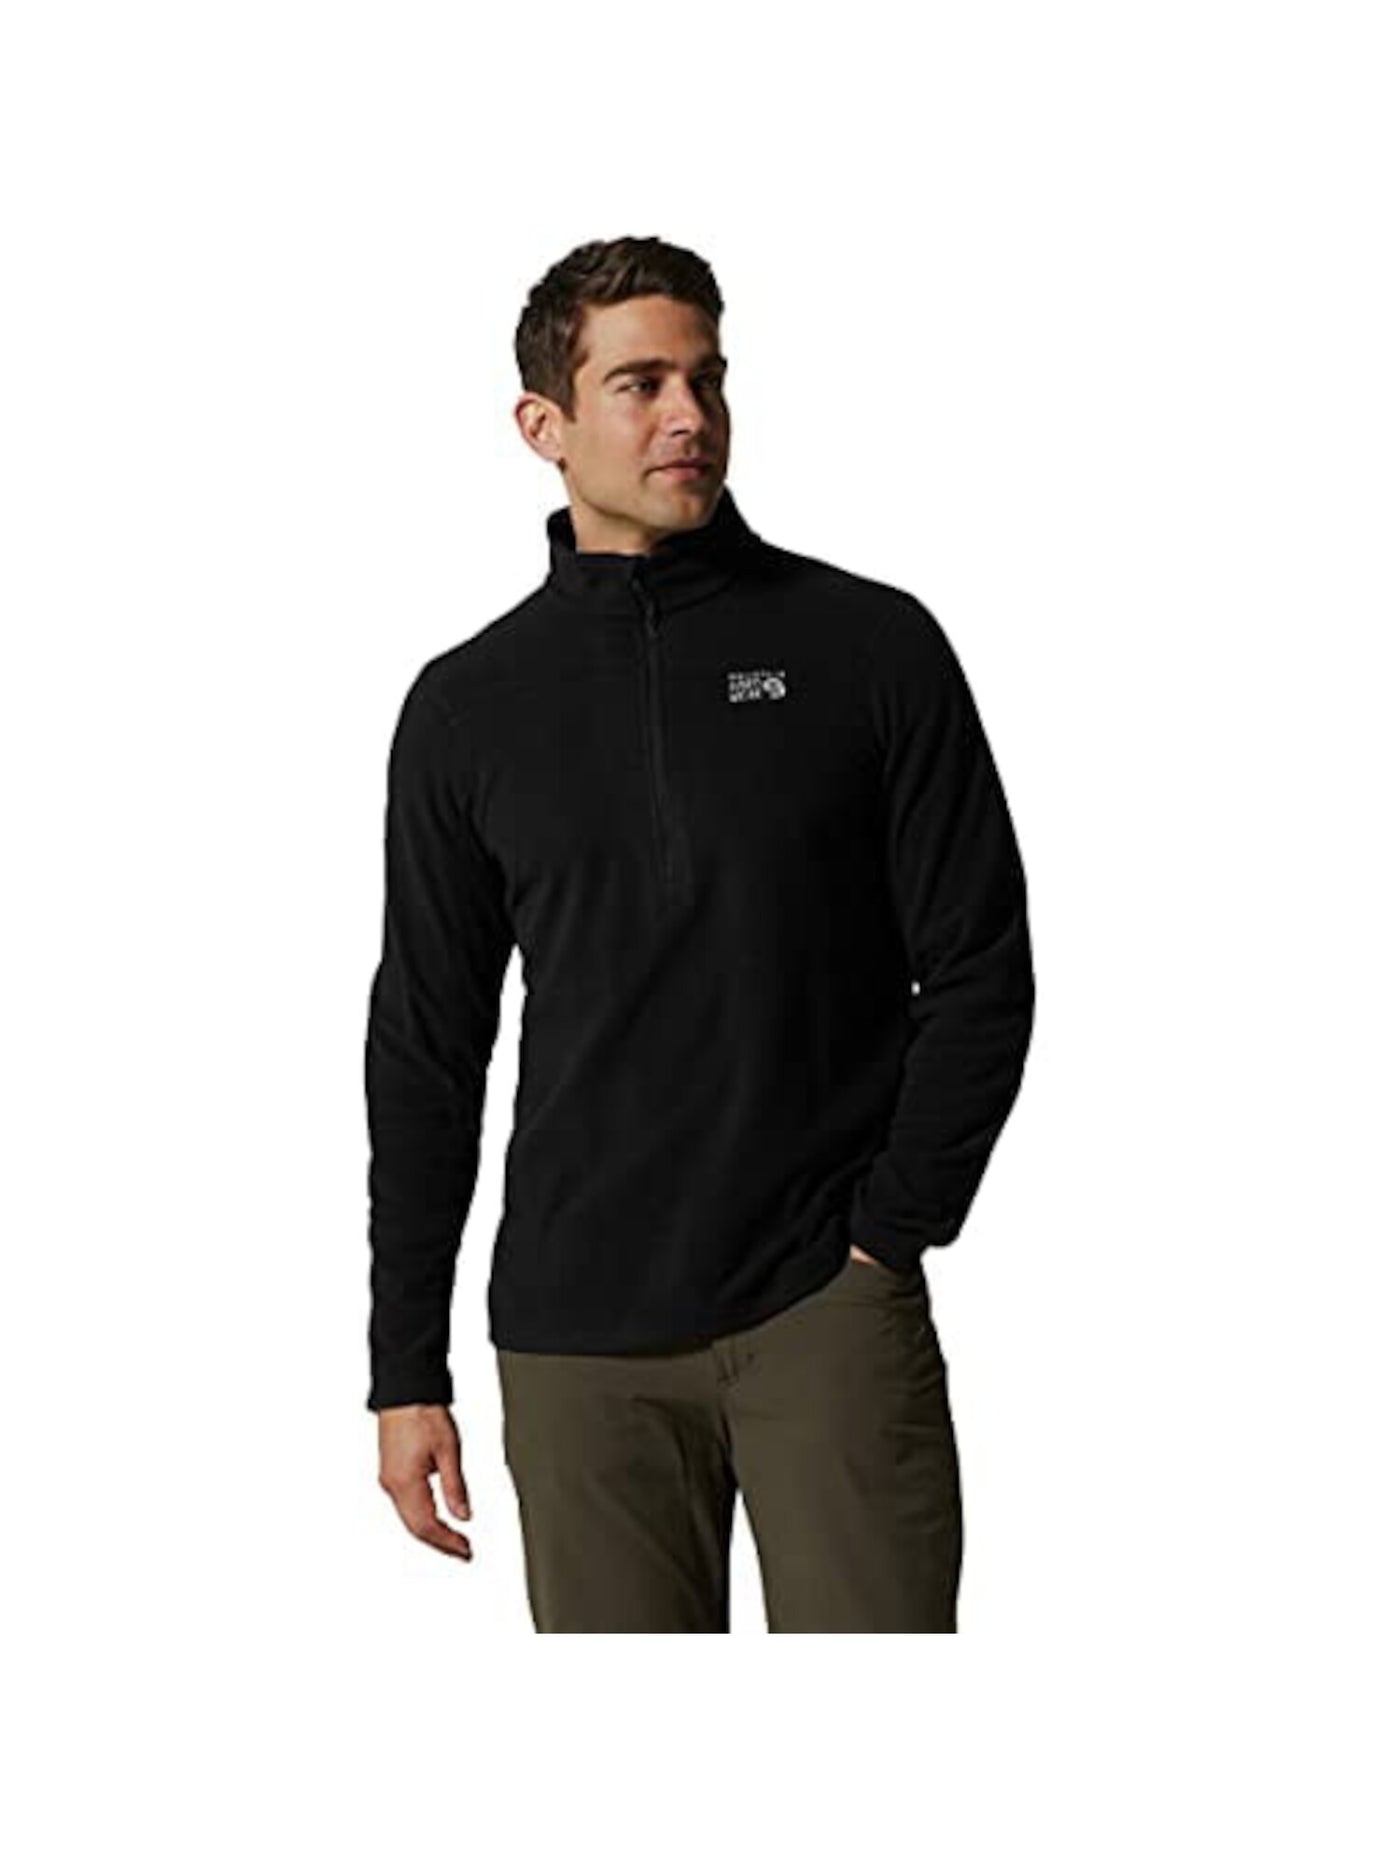 MOUNTAIN HARD WEAR Mens Black Stand Collar Quarter-Zip Moisture Wicking Sweatshirt XL